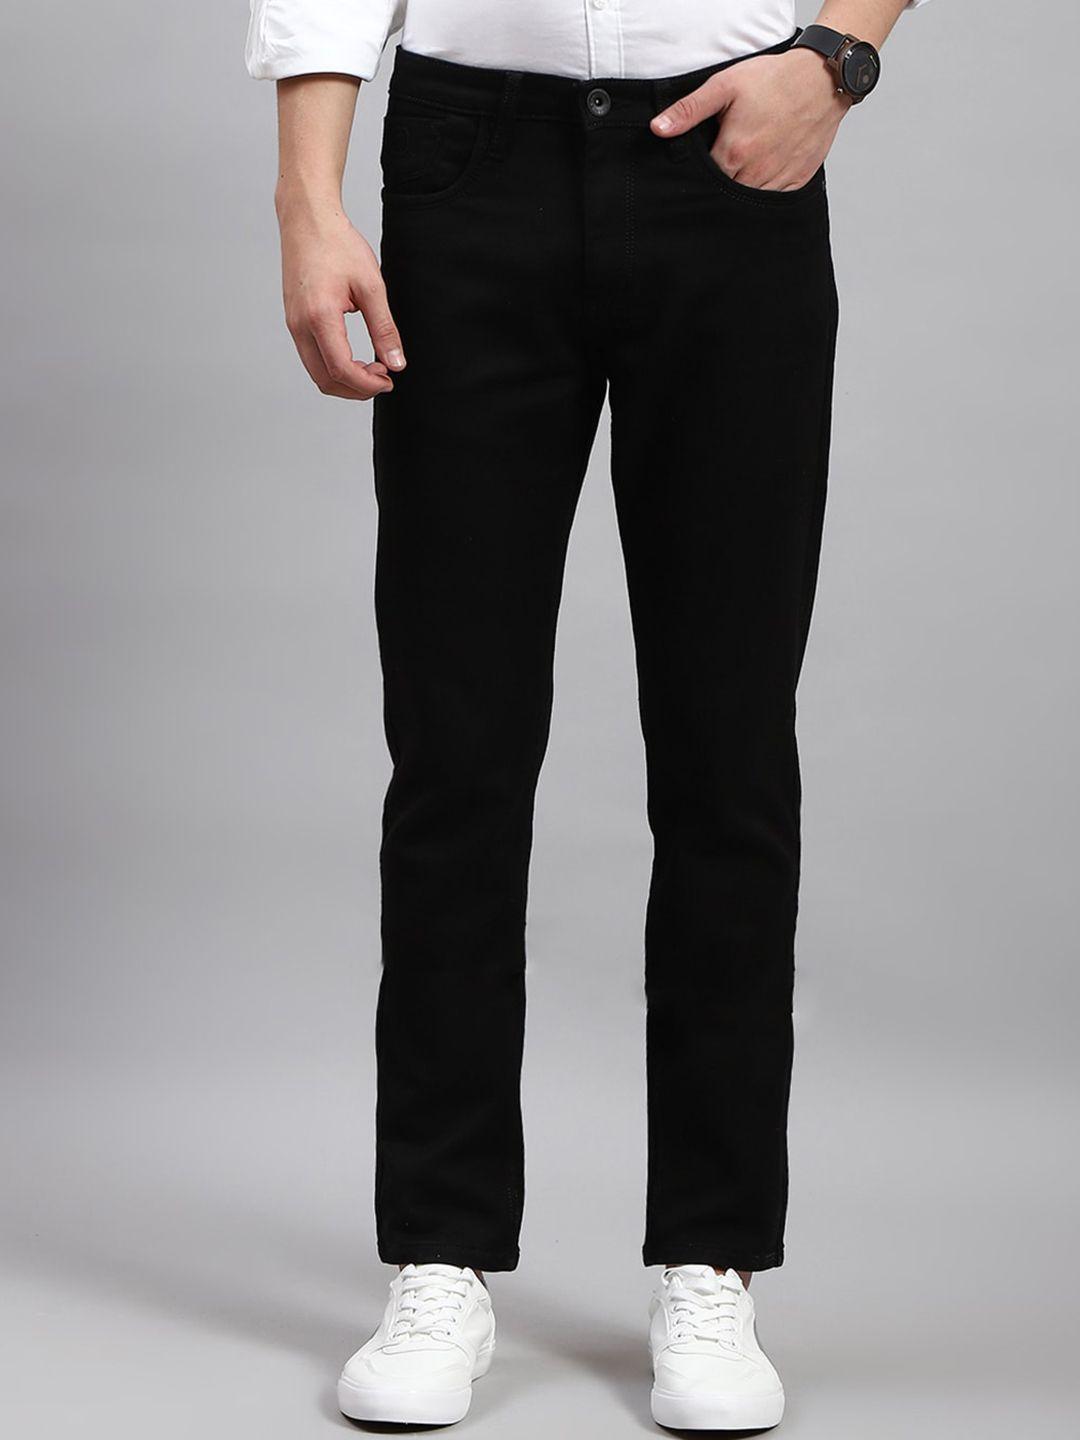 monte-carlo-slim-fit-mid-rise-clean-look-dark-cotton-jeans